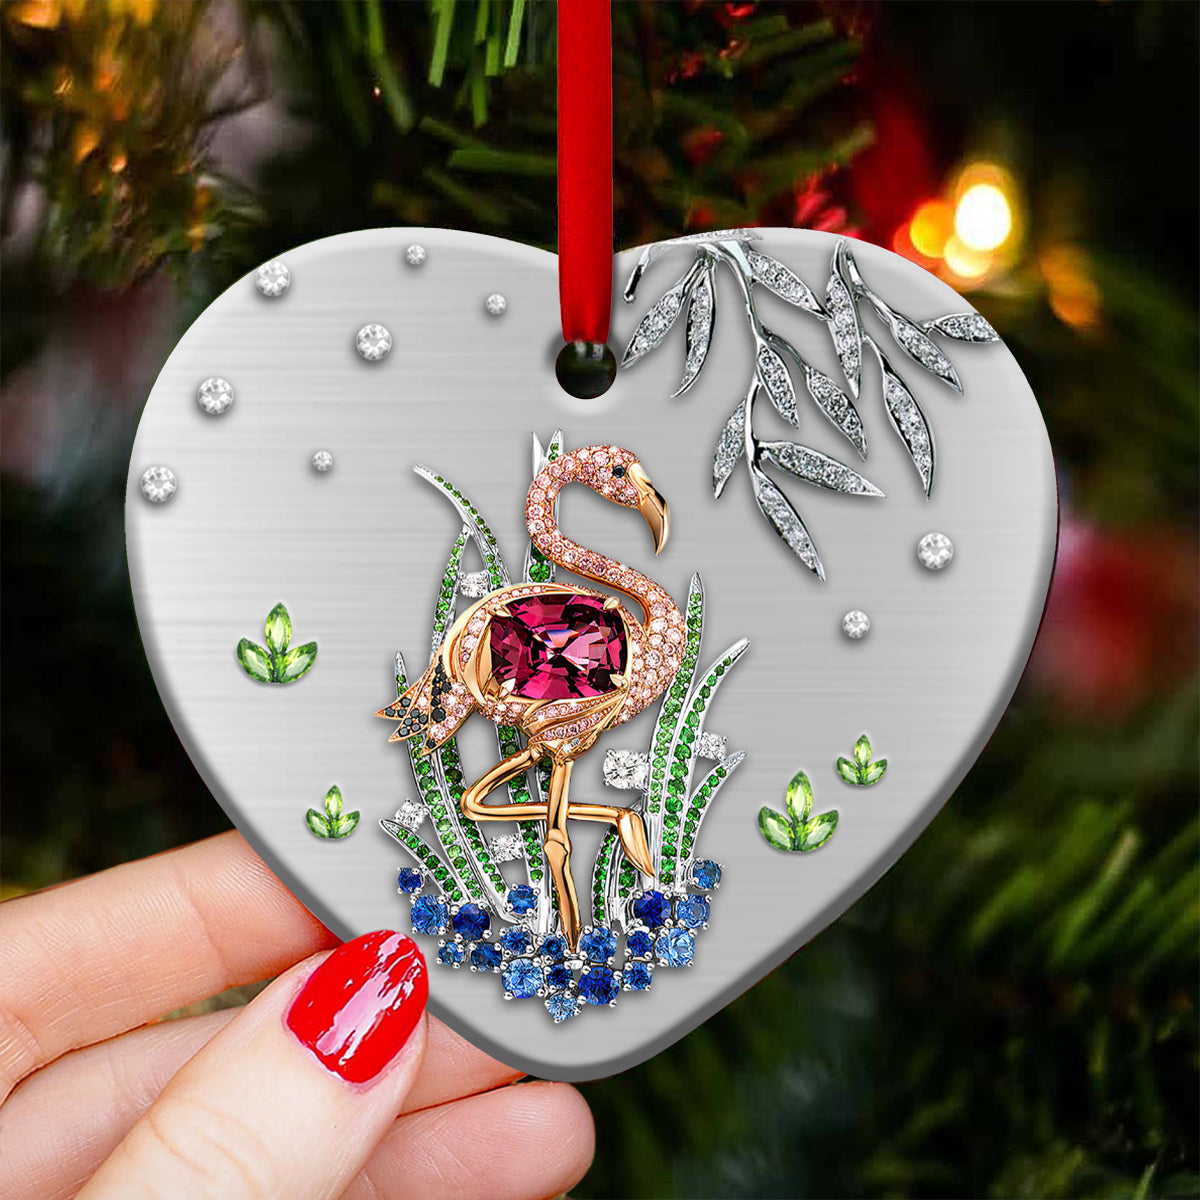 Flamingo Advice Heart Ornament - Christmas Ornament - Ciaocustom